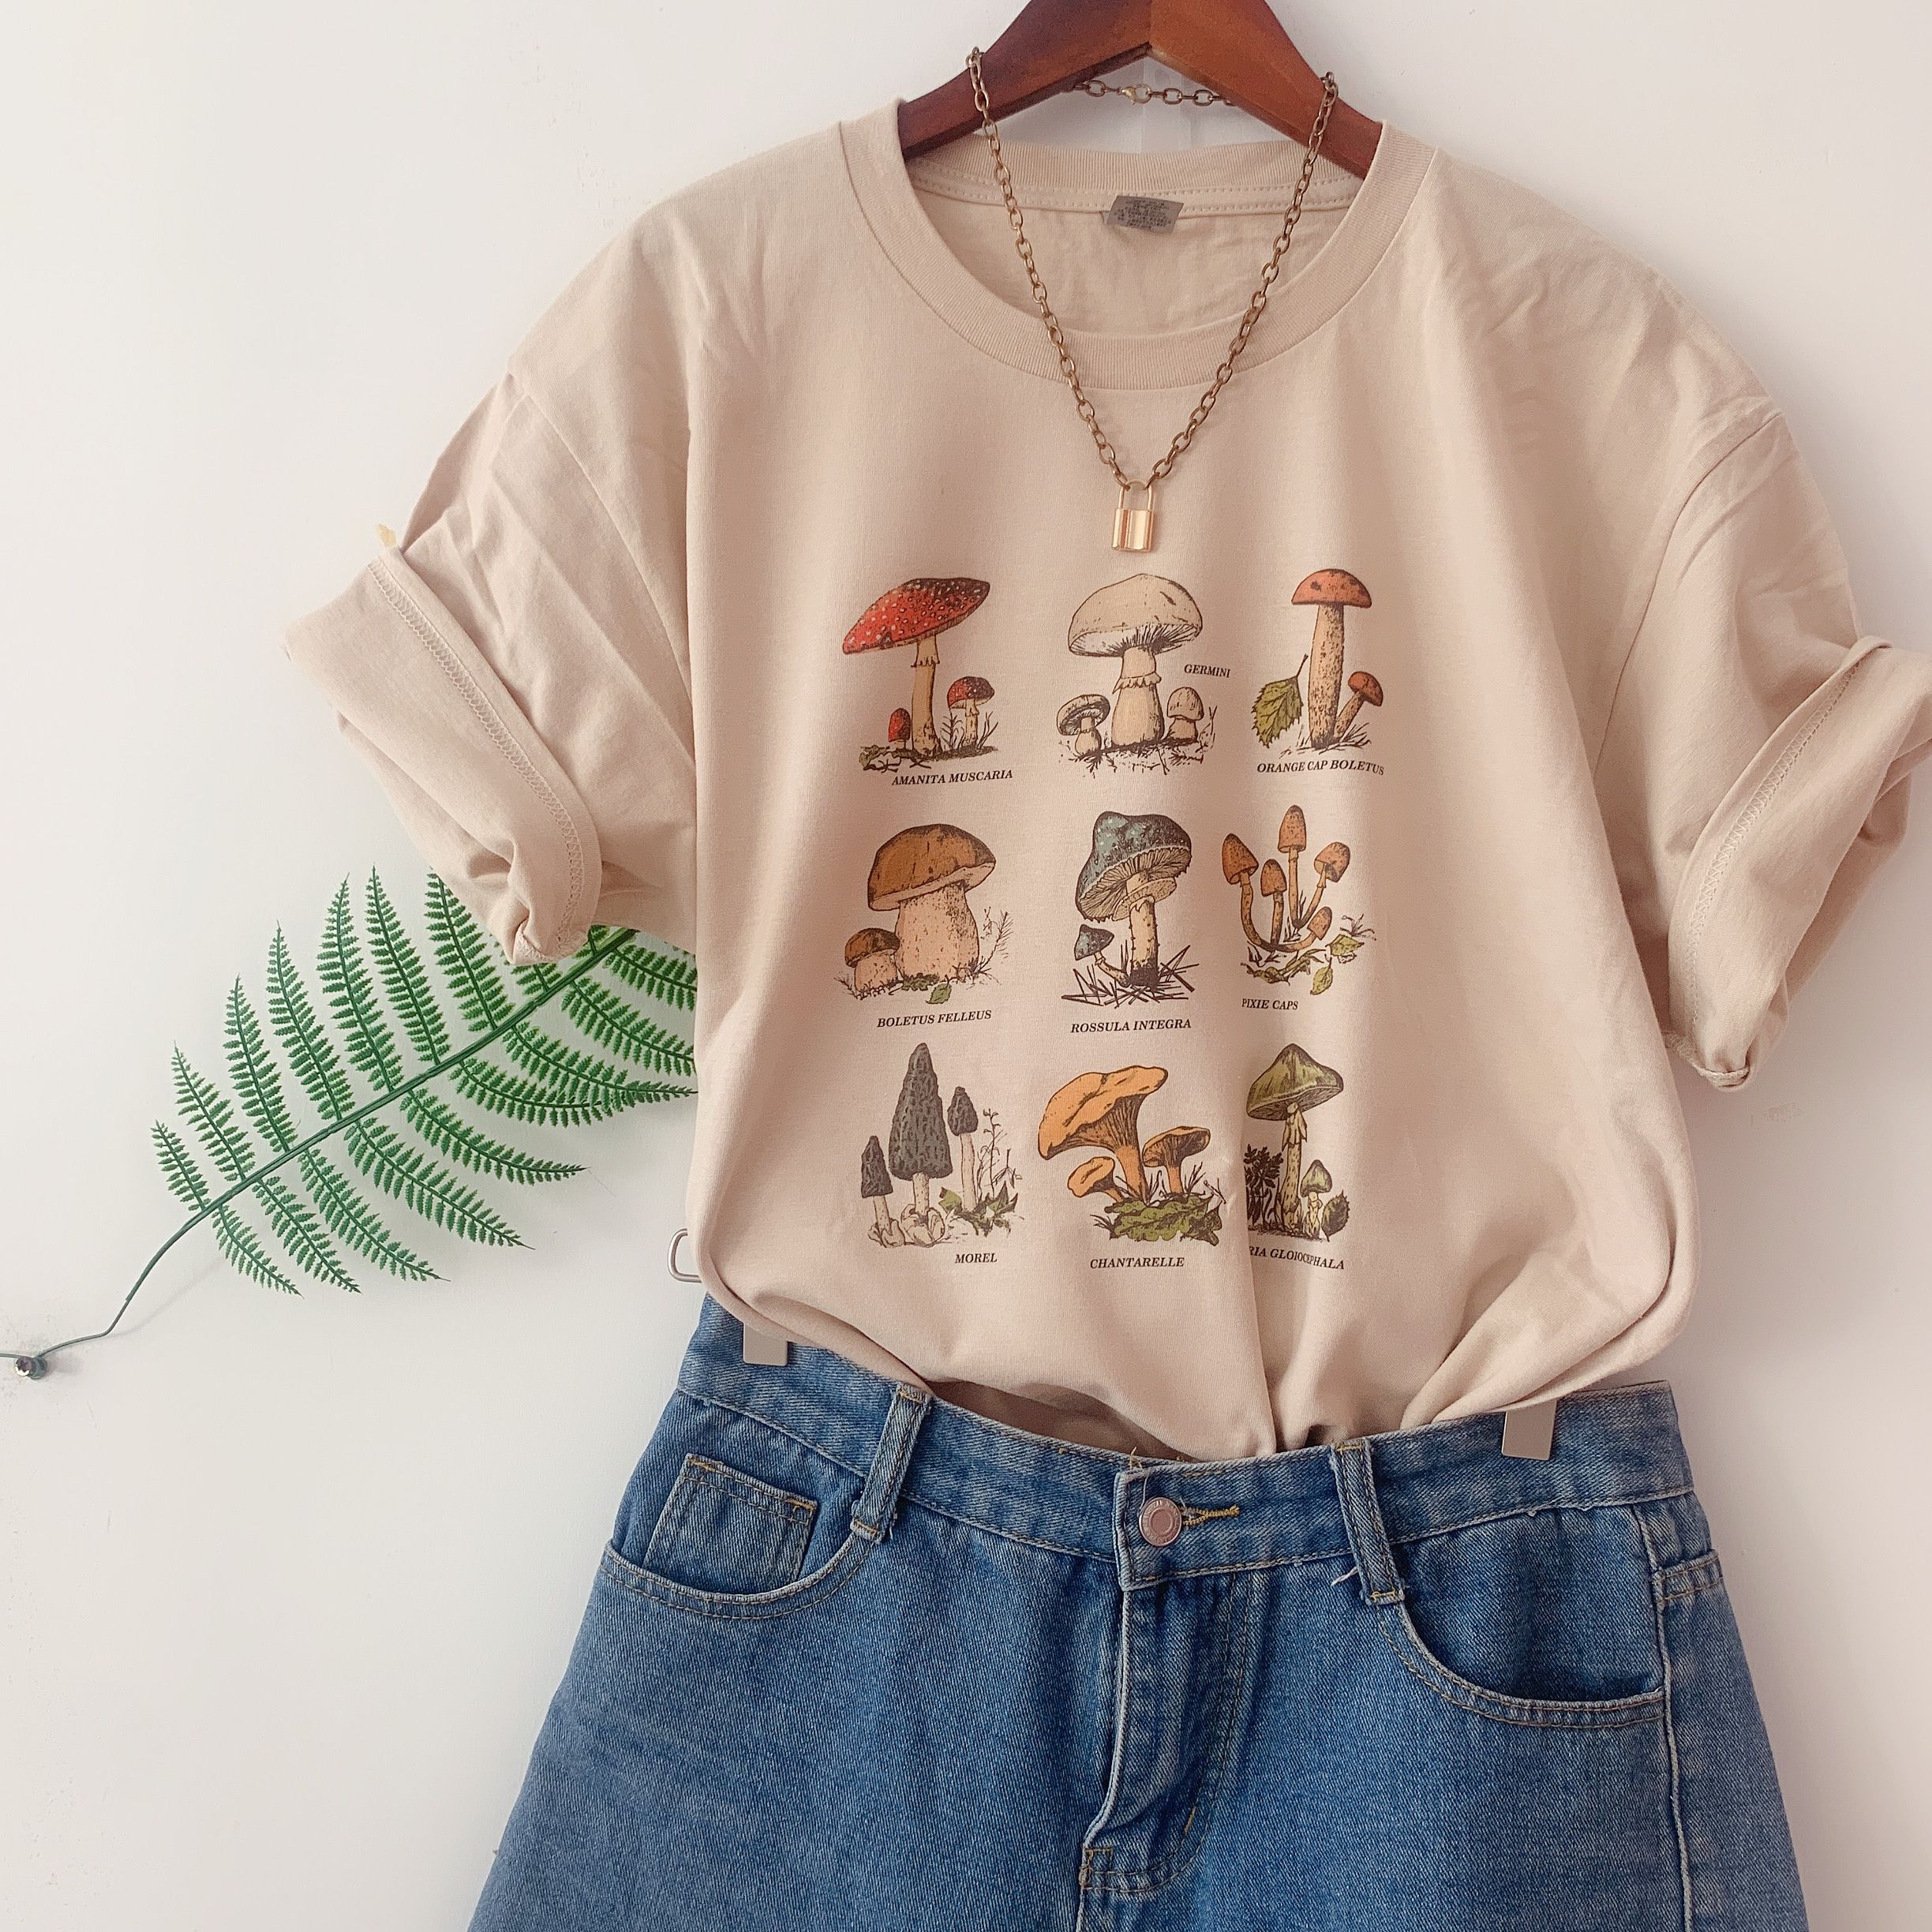 LANFUBEISI VIP HJN Vintage Fashion Mushroom Special Print Oversized T Shirt Egirl Grunge Aesthetic Streetwear Graphic Tees Women T-shirts